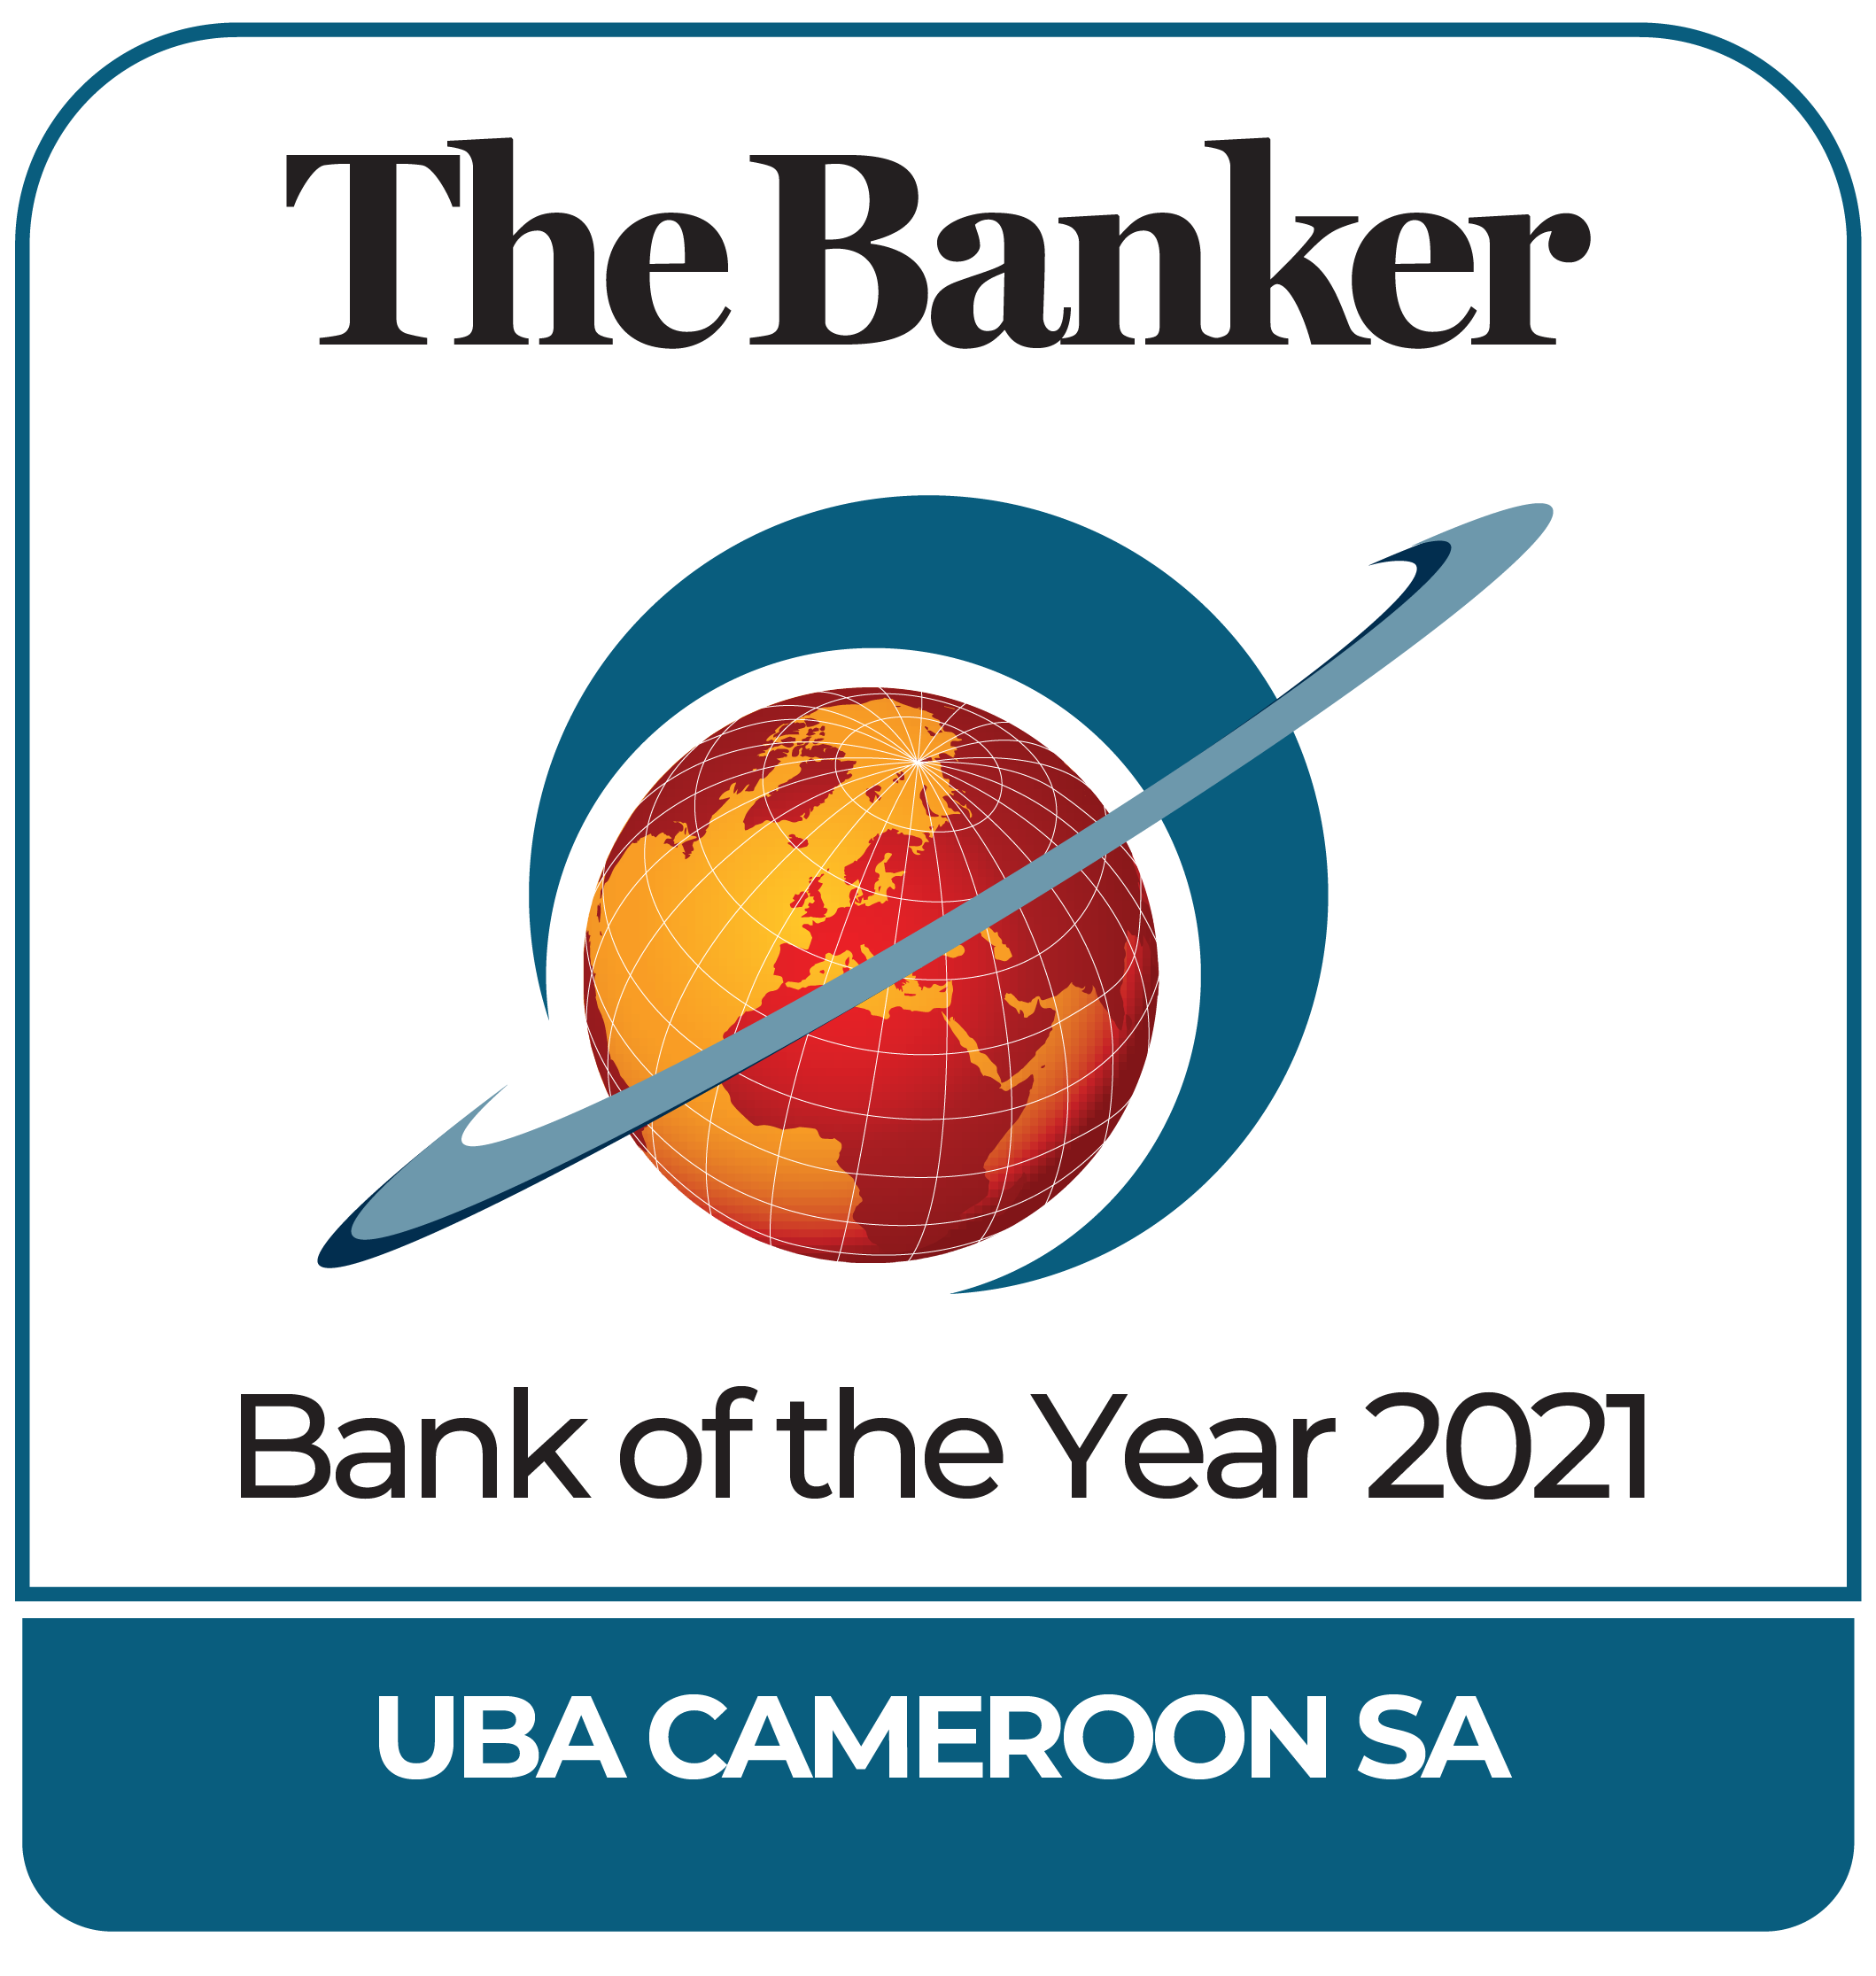 The banker 2021 logo